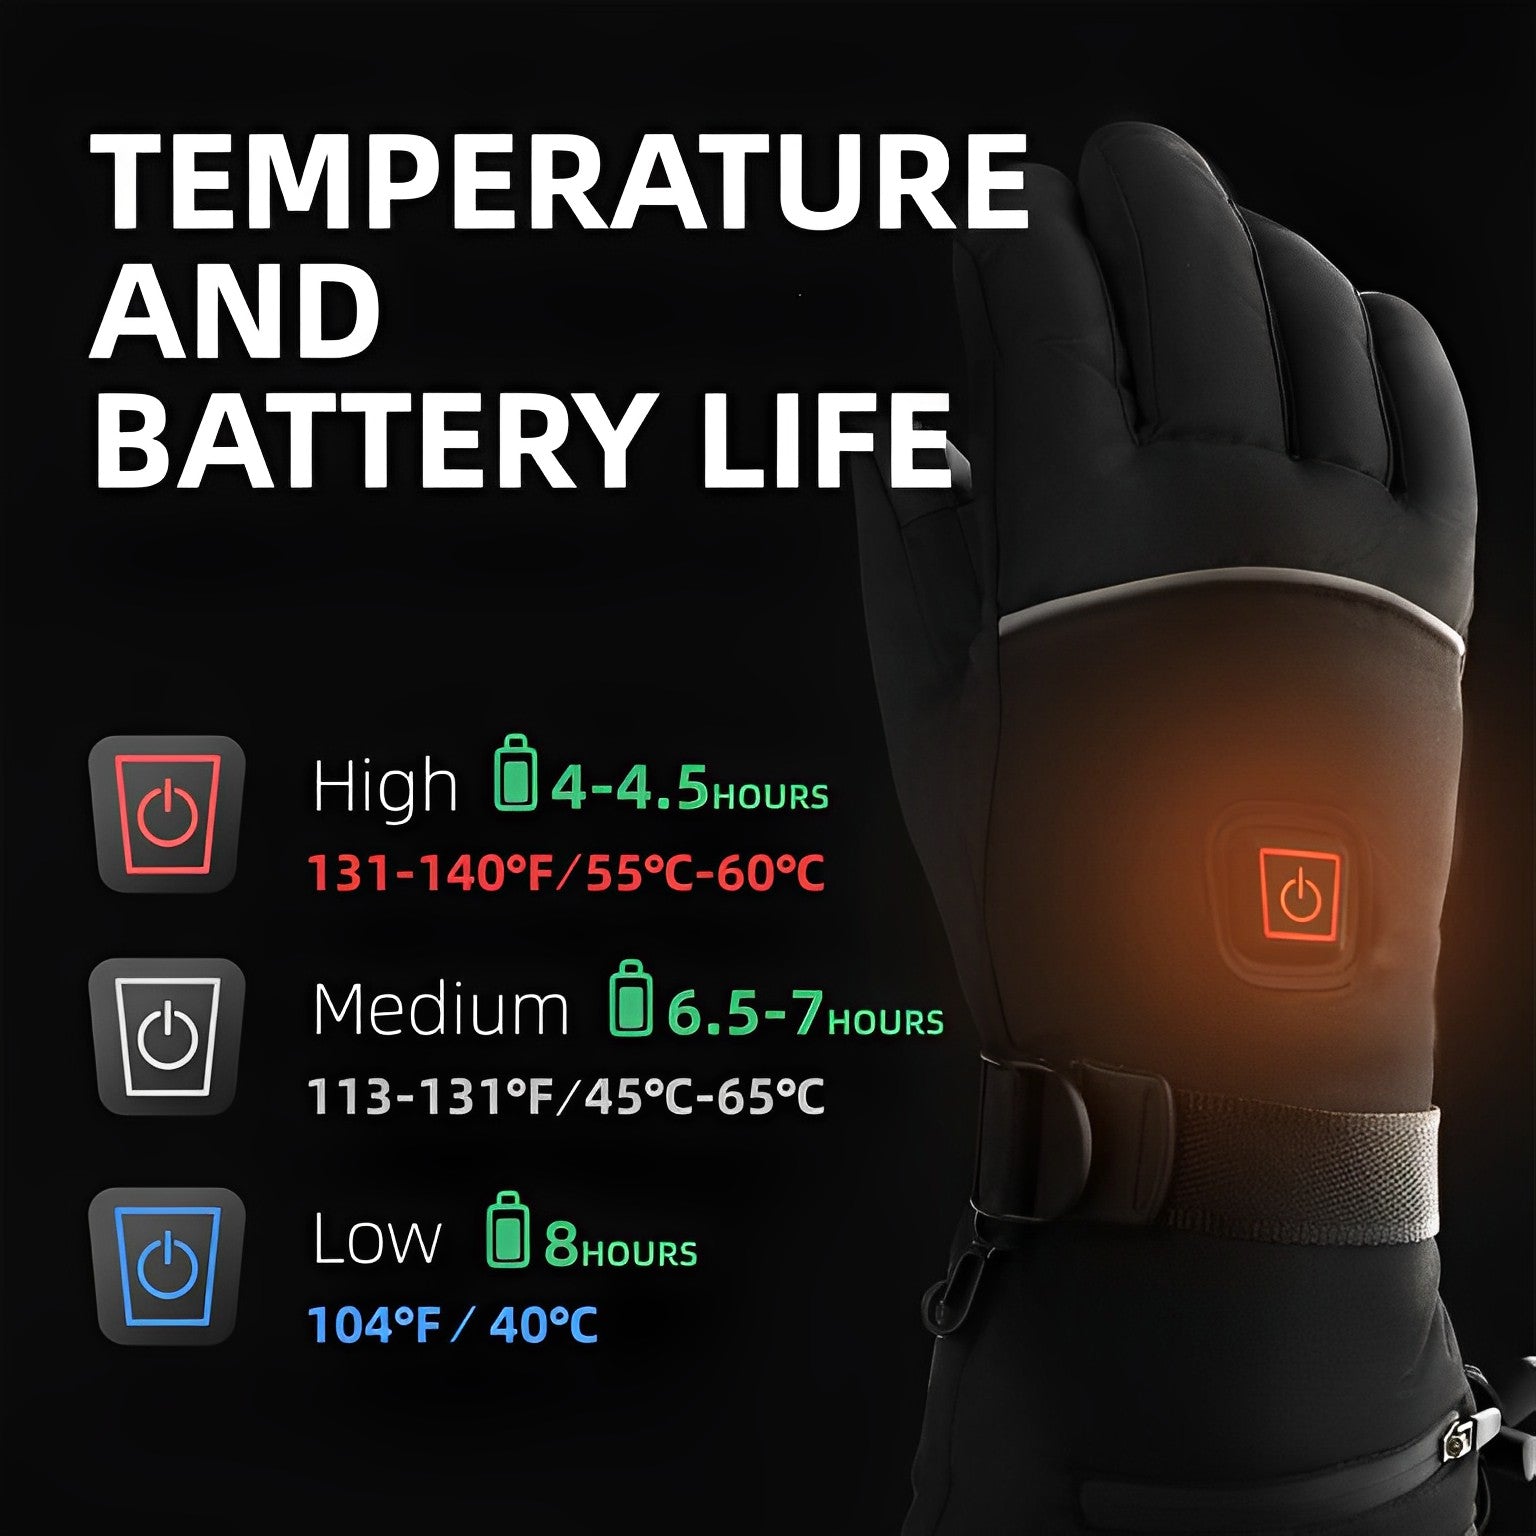 Unisex Heated Gloves